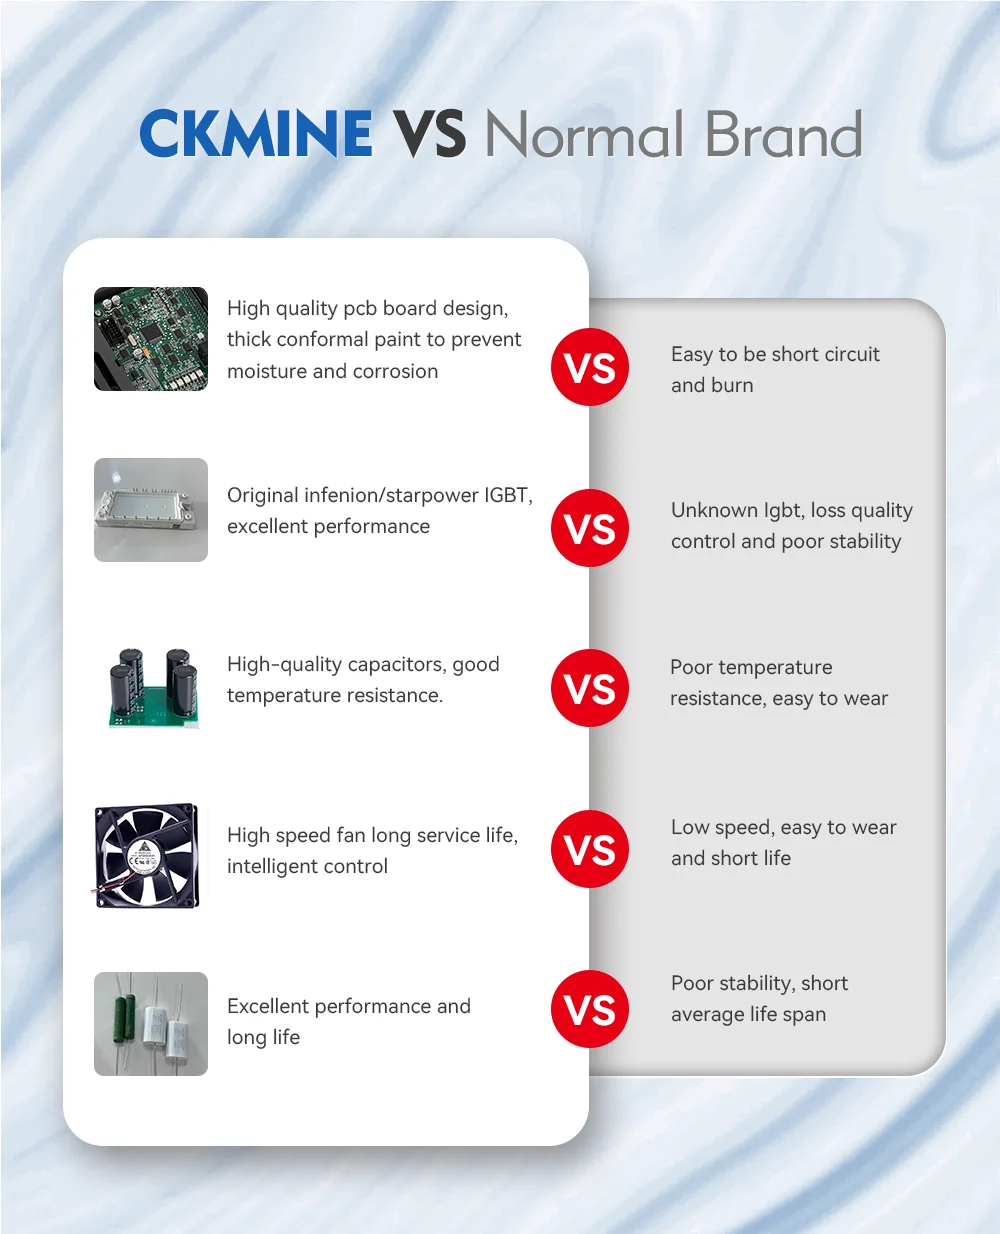 CKMINE 380V 5.5kW オープンループ エレベーター可変低周波インバーター 3 相 VVVF ドライブ VFD AC ドライバー リフト工場用